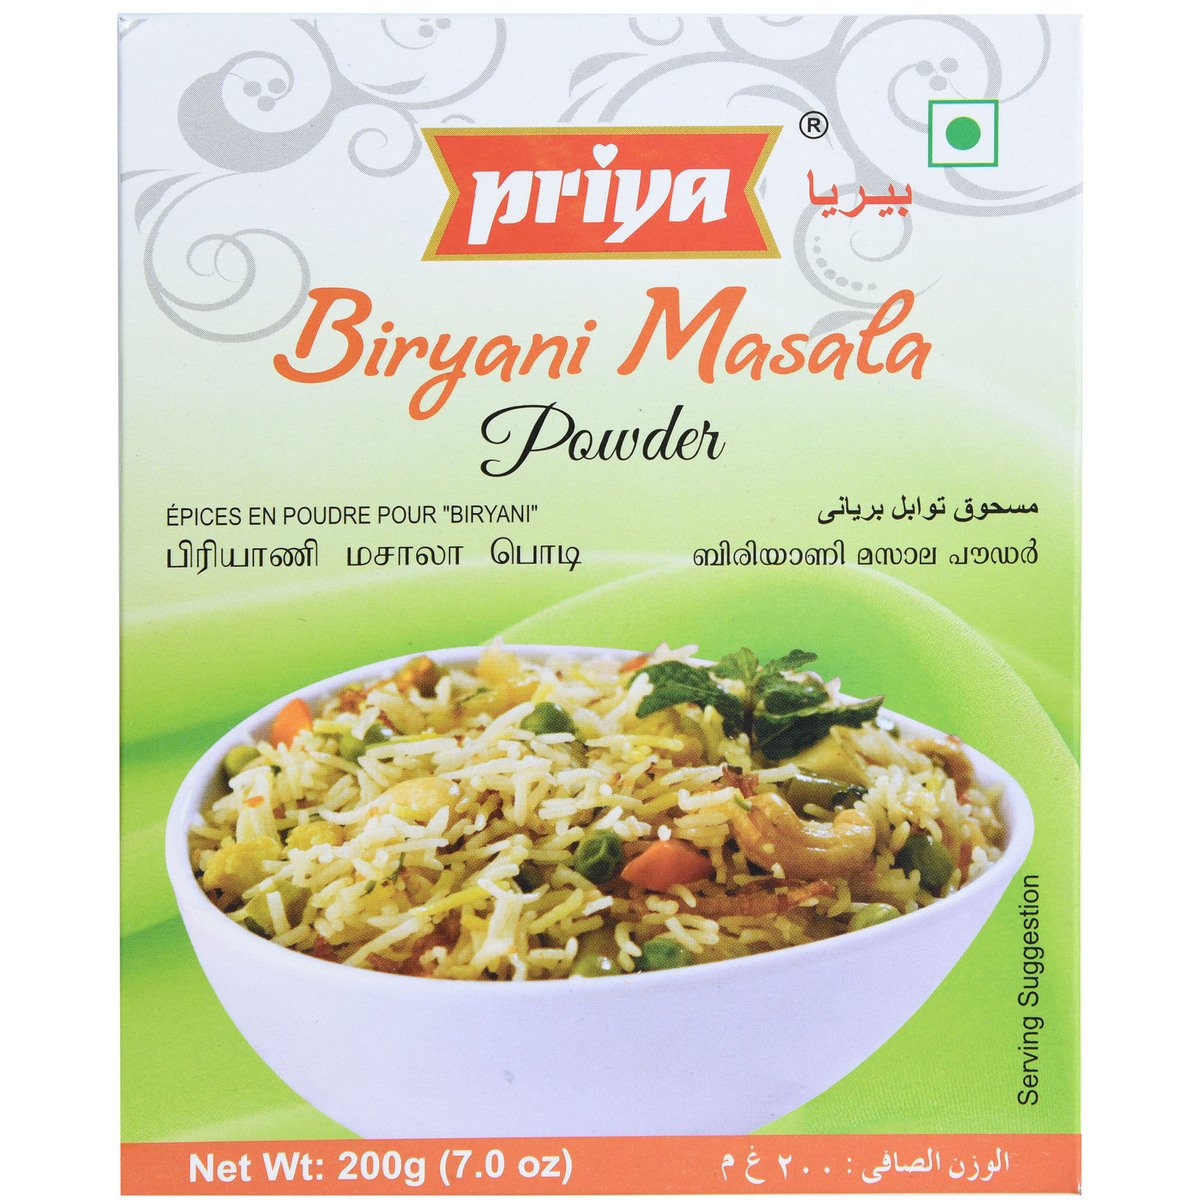 Priya Biriyani Masala Powder 200g